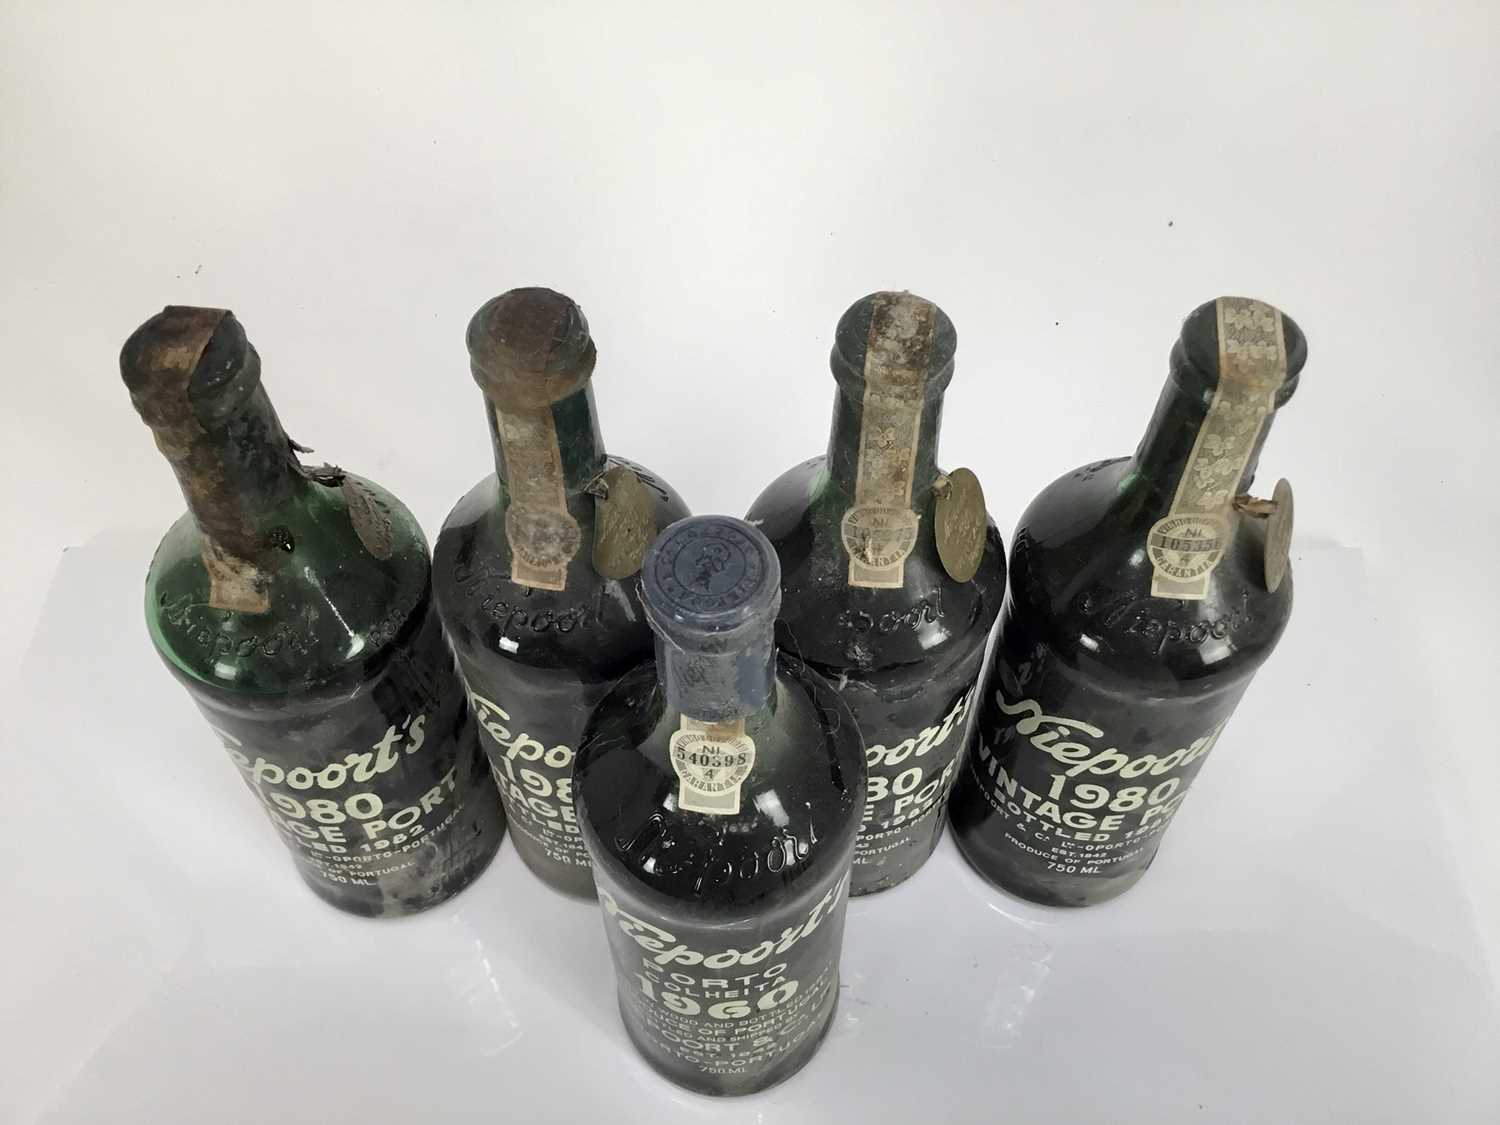 Port - five bottles, Niepoort's 1960 (1) and 1980 (4) - Image 2 of 3